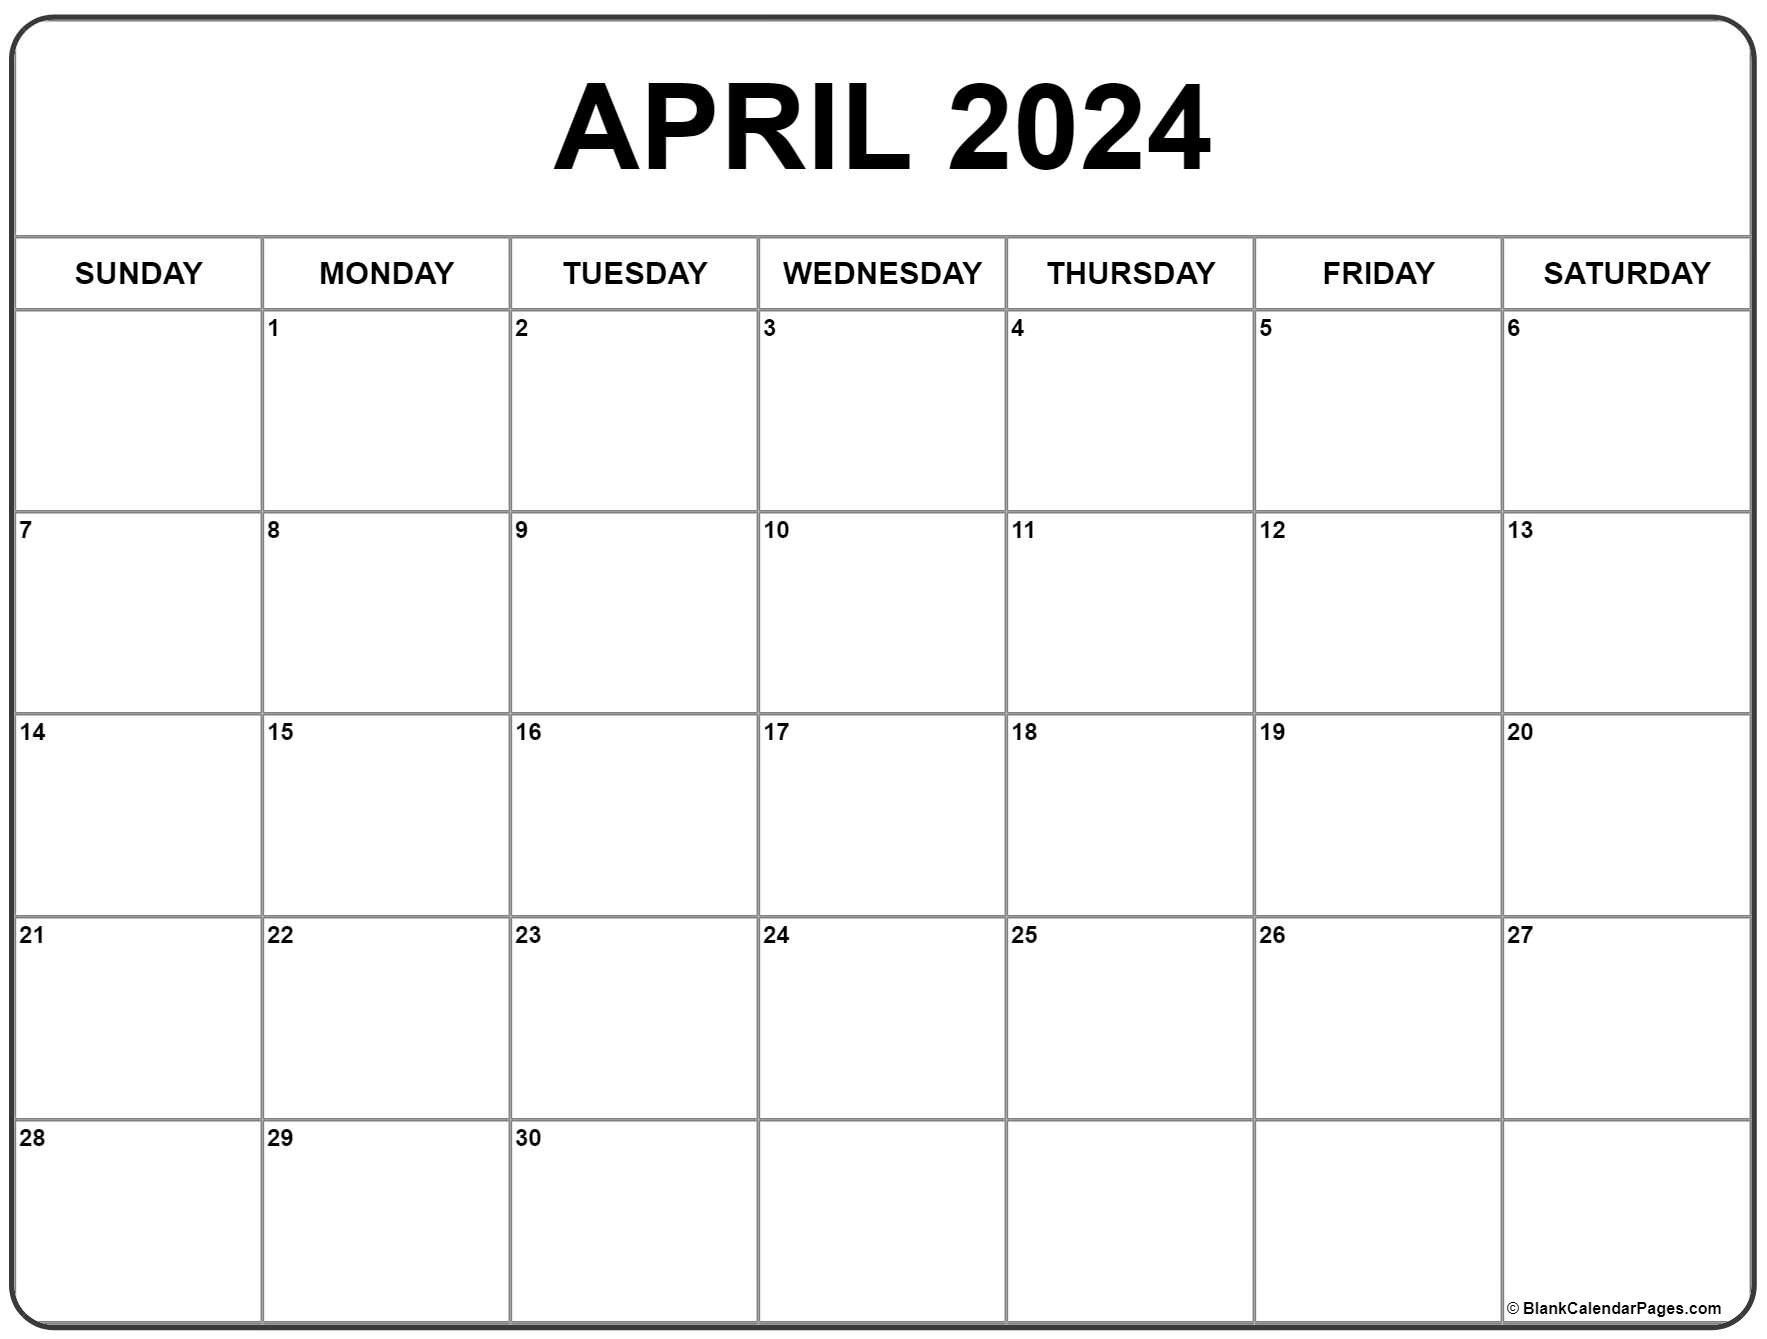 April 2024 Calendar | Free Printable Calendar | Printable Calendar 2024 April